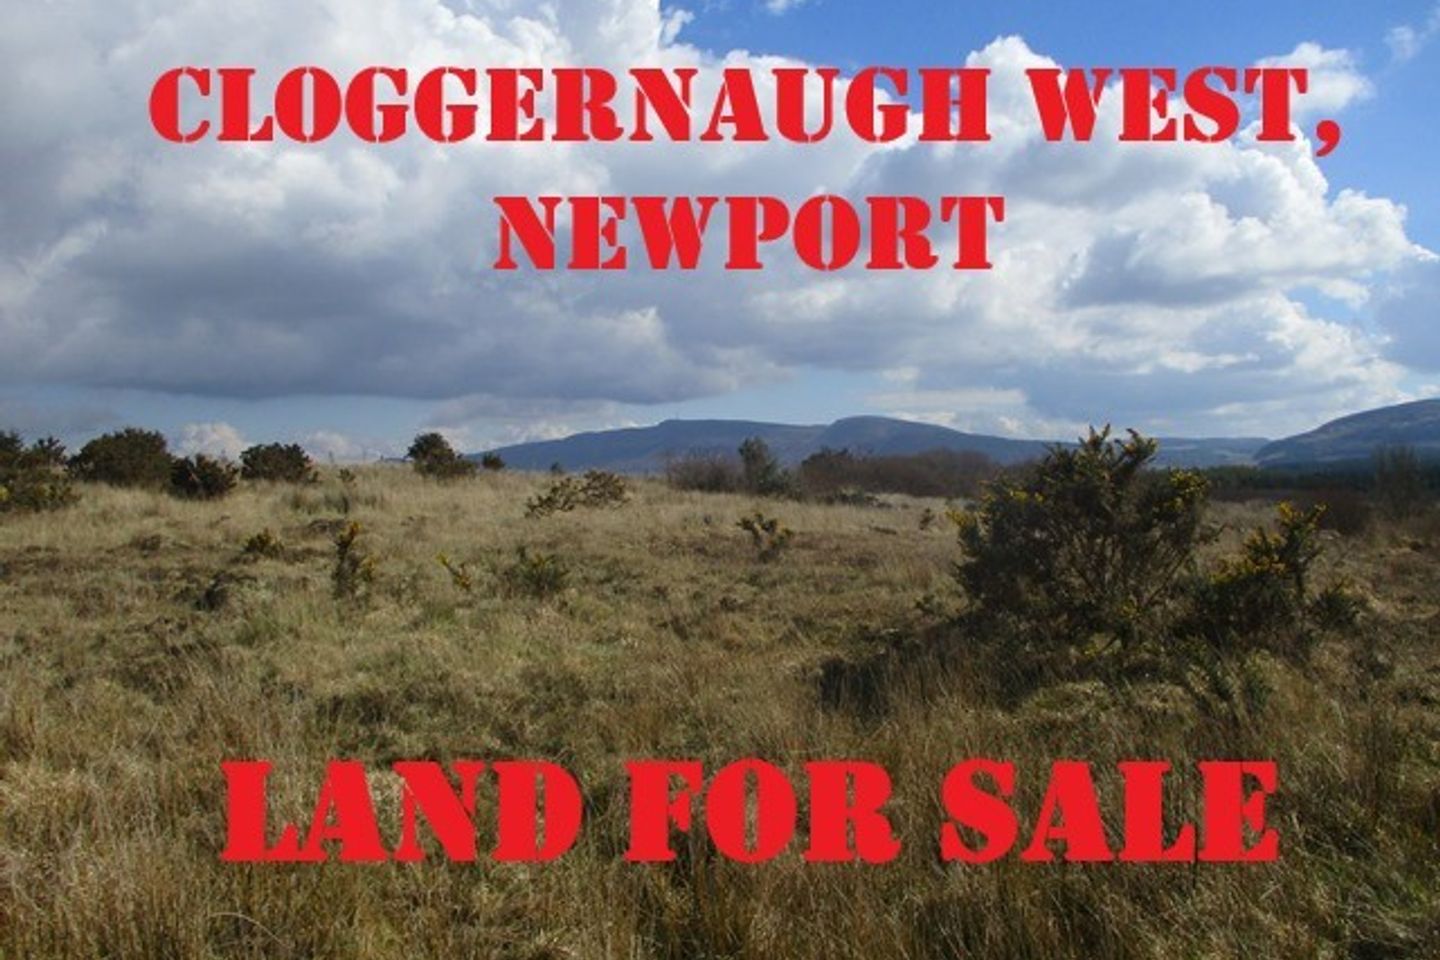 Cloggernaugh West, Newport, Co. Mayo